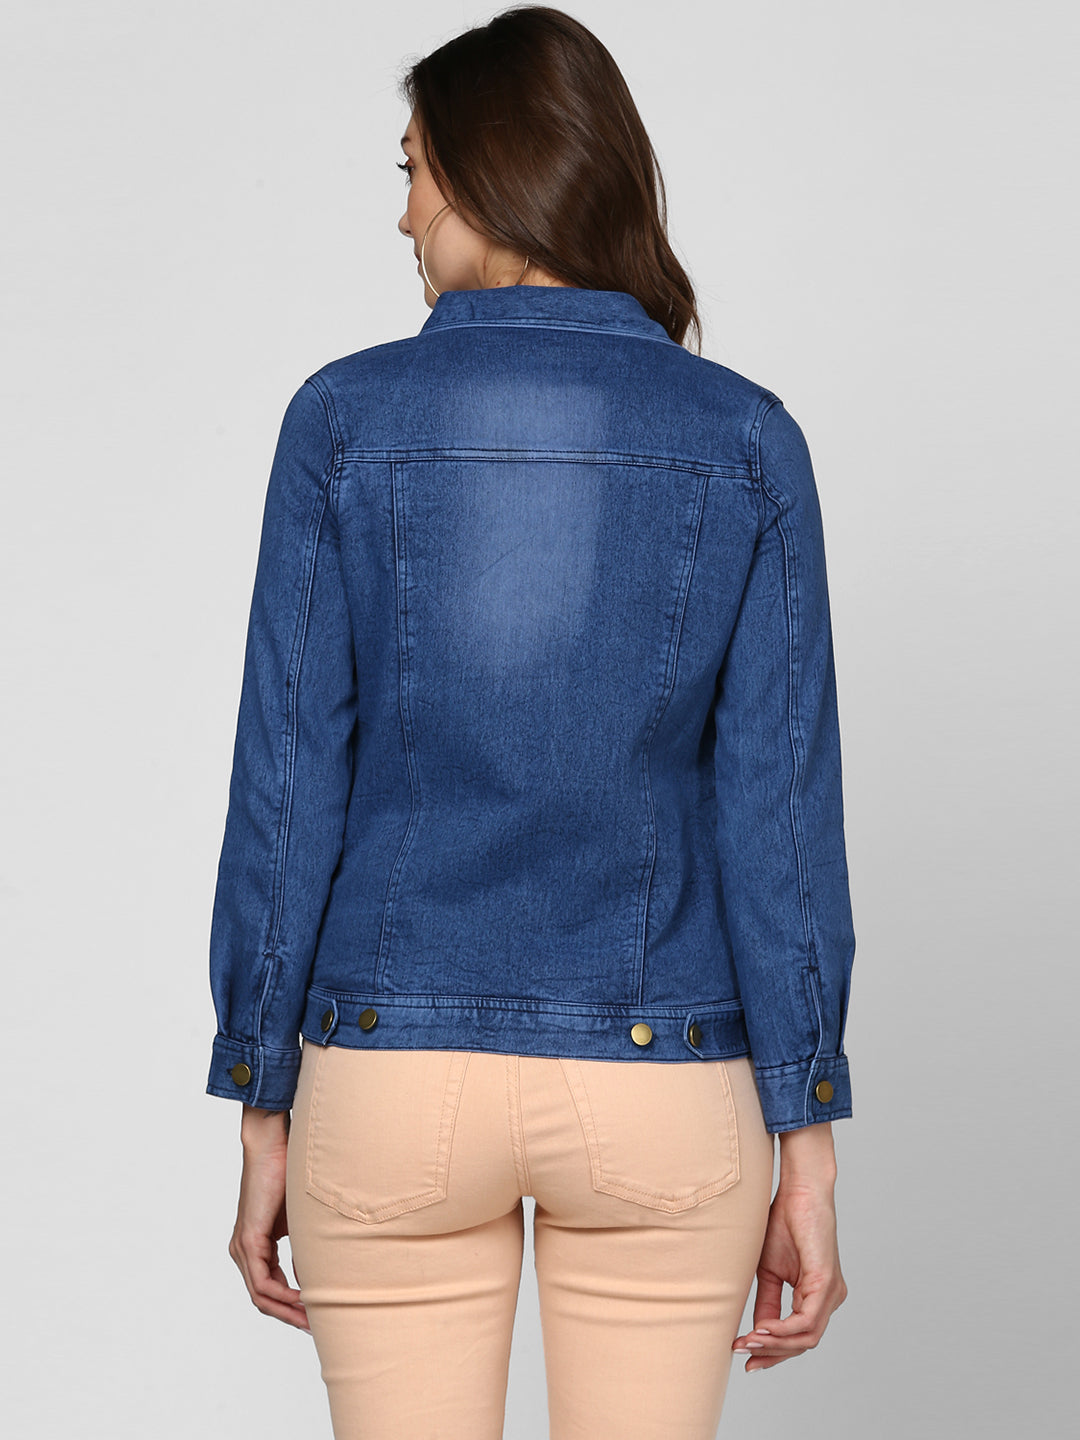 Women's Blue Denim Washed Jacket